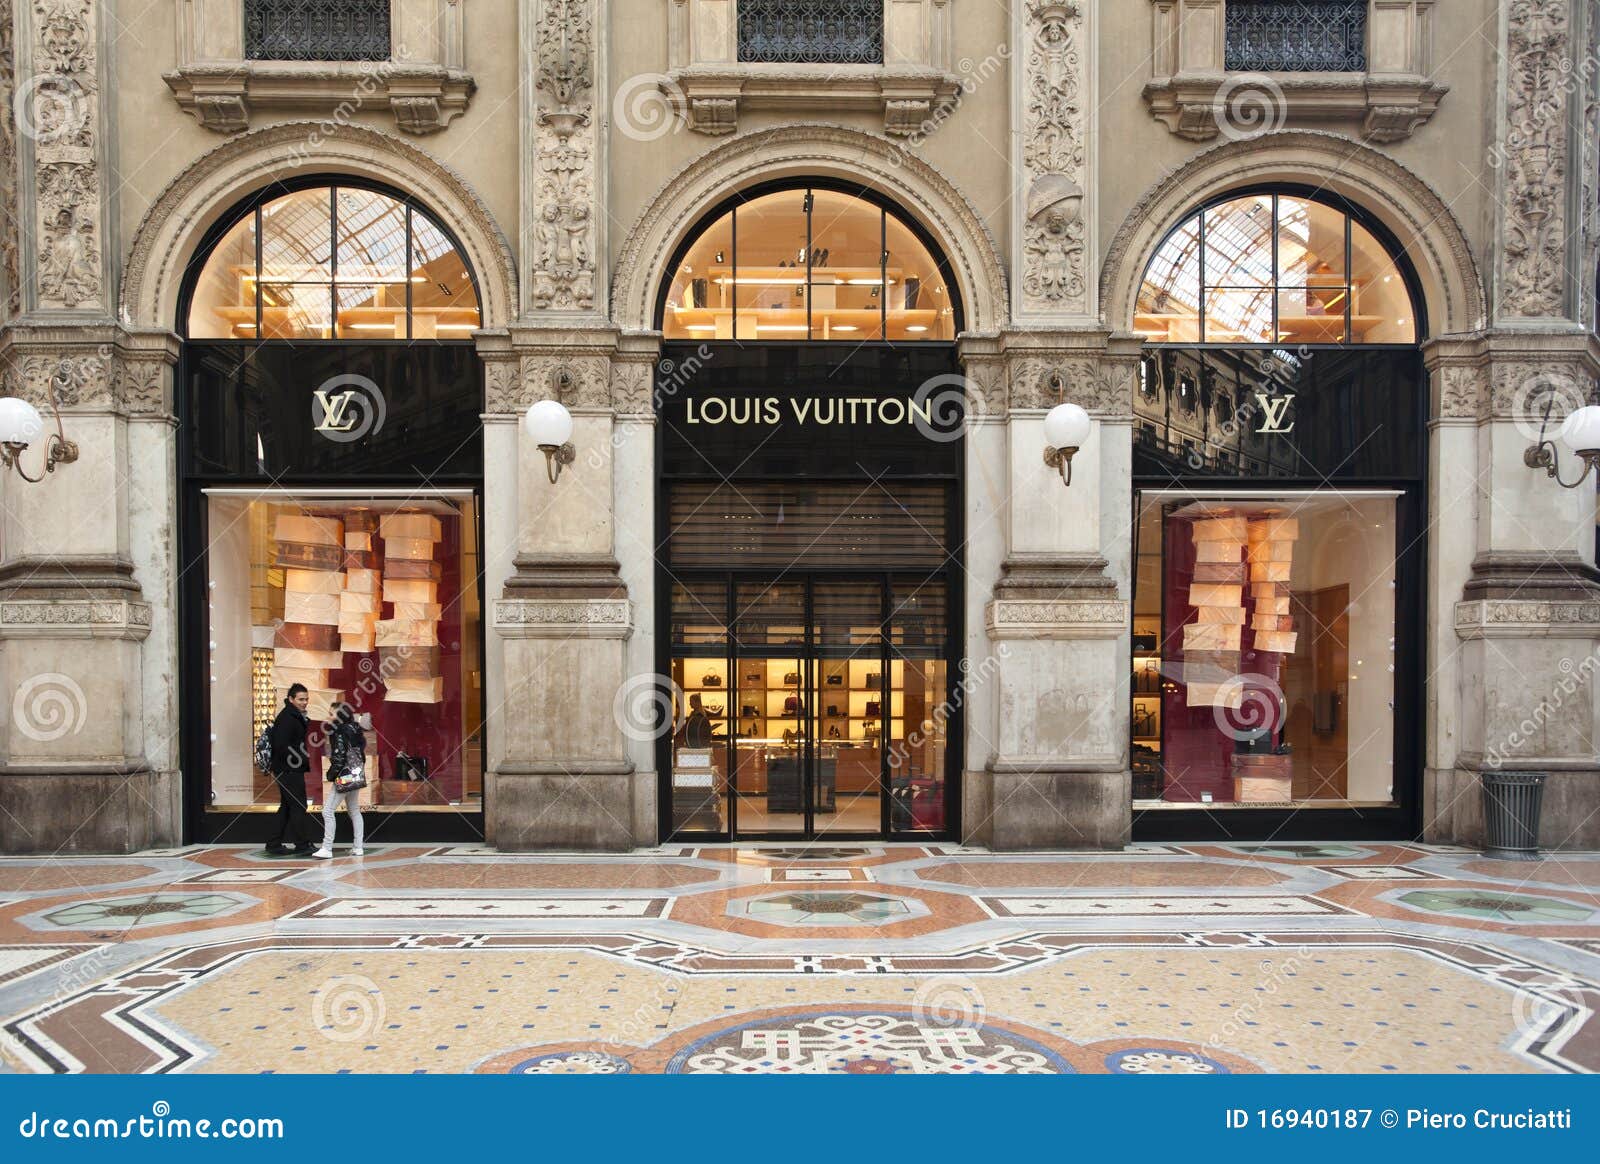 SHOPPING: Louis Vuitton Boutique, Milan, Italy Editorial Photography Image of golden, brand: 16940187